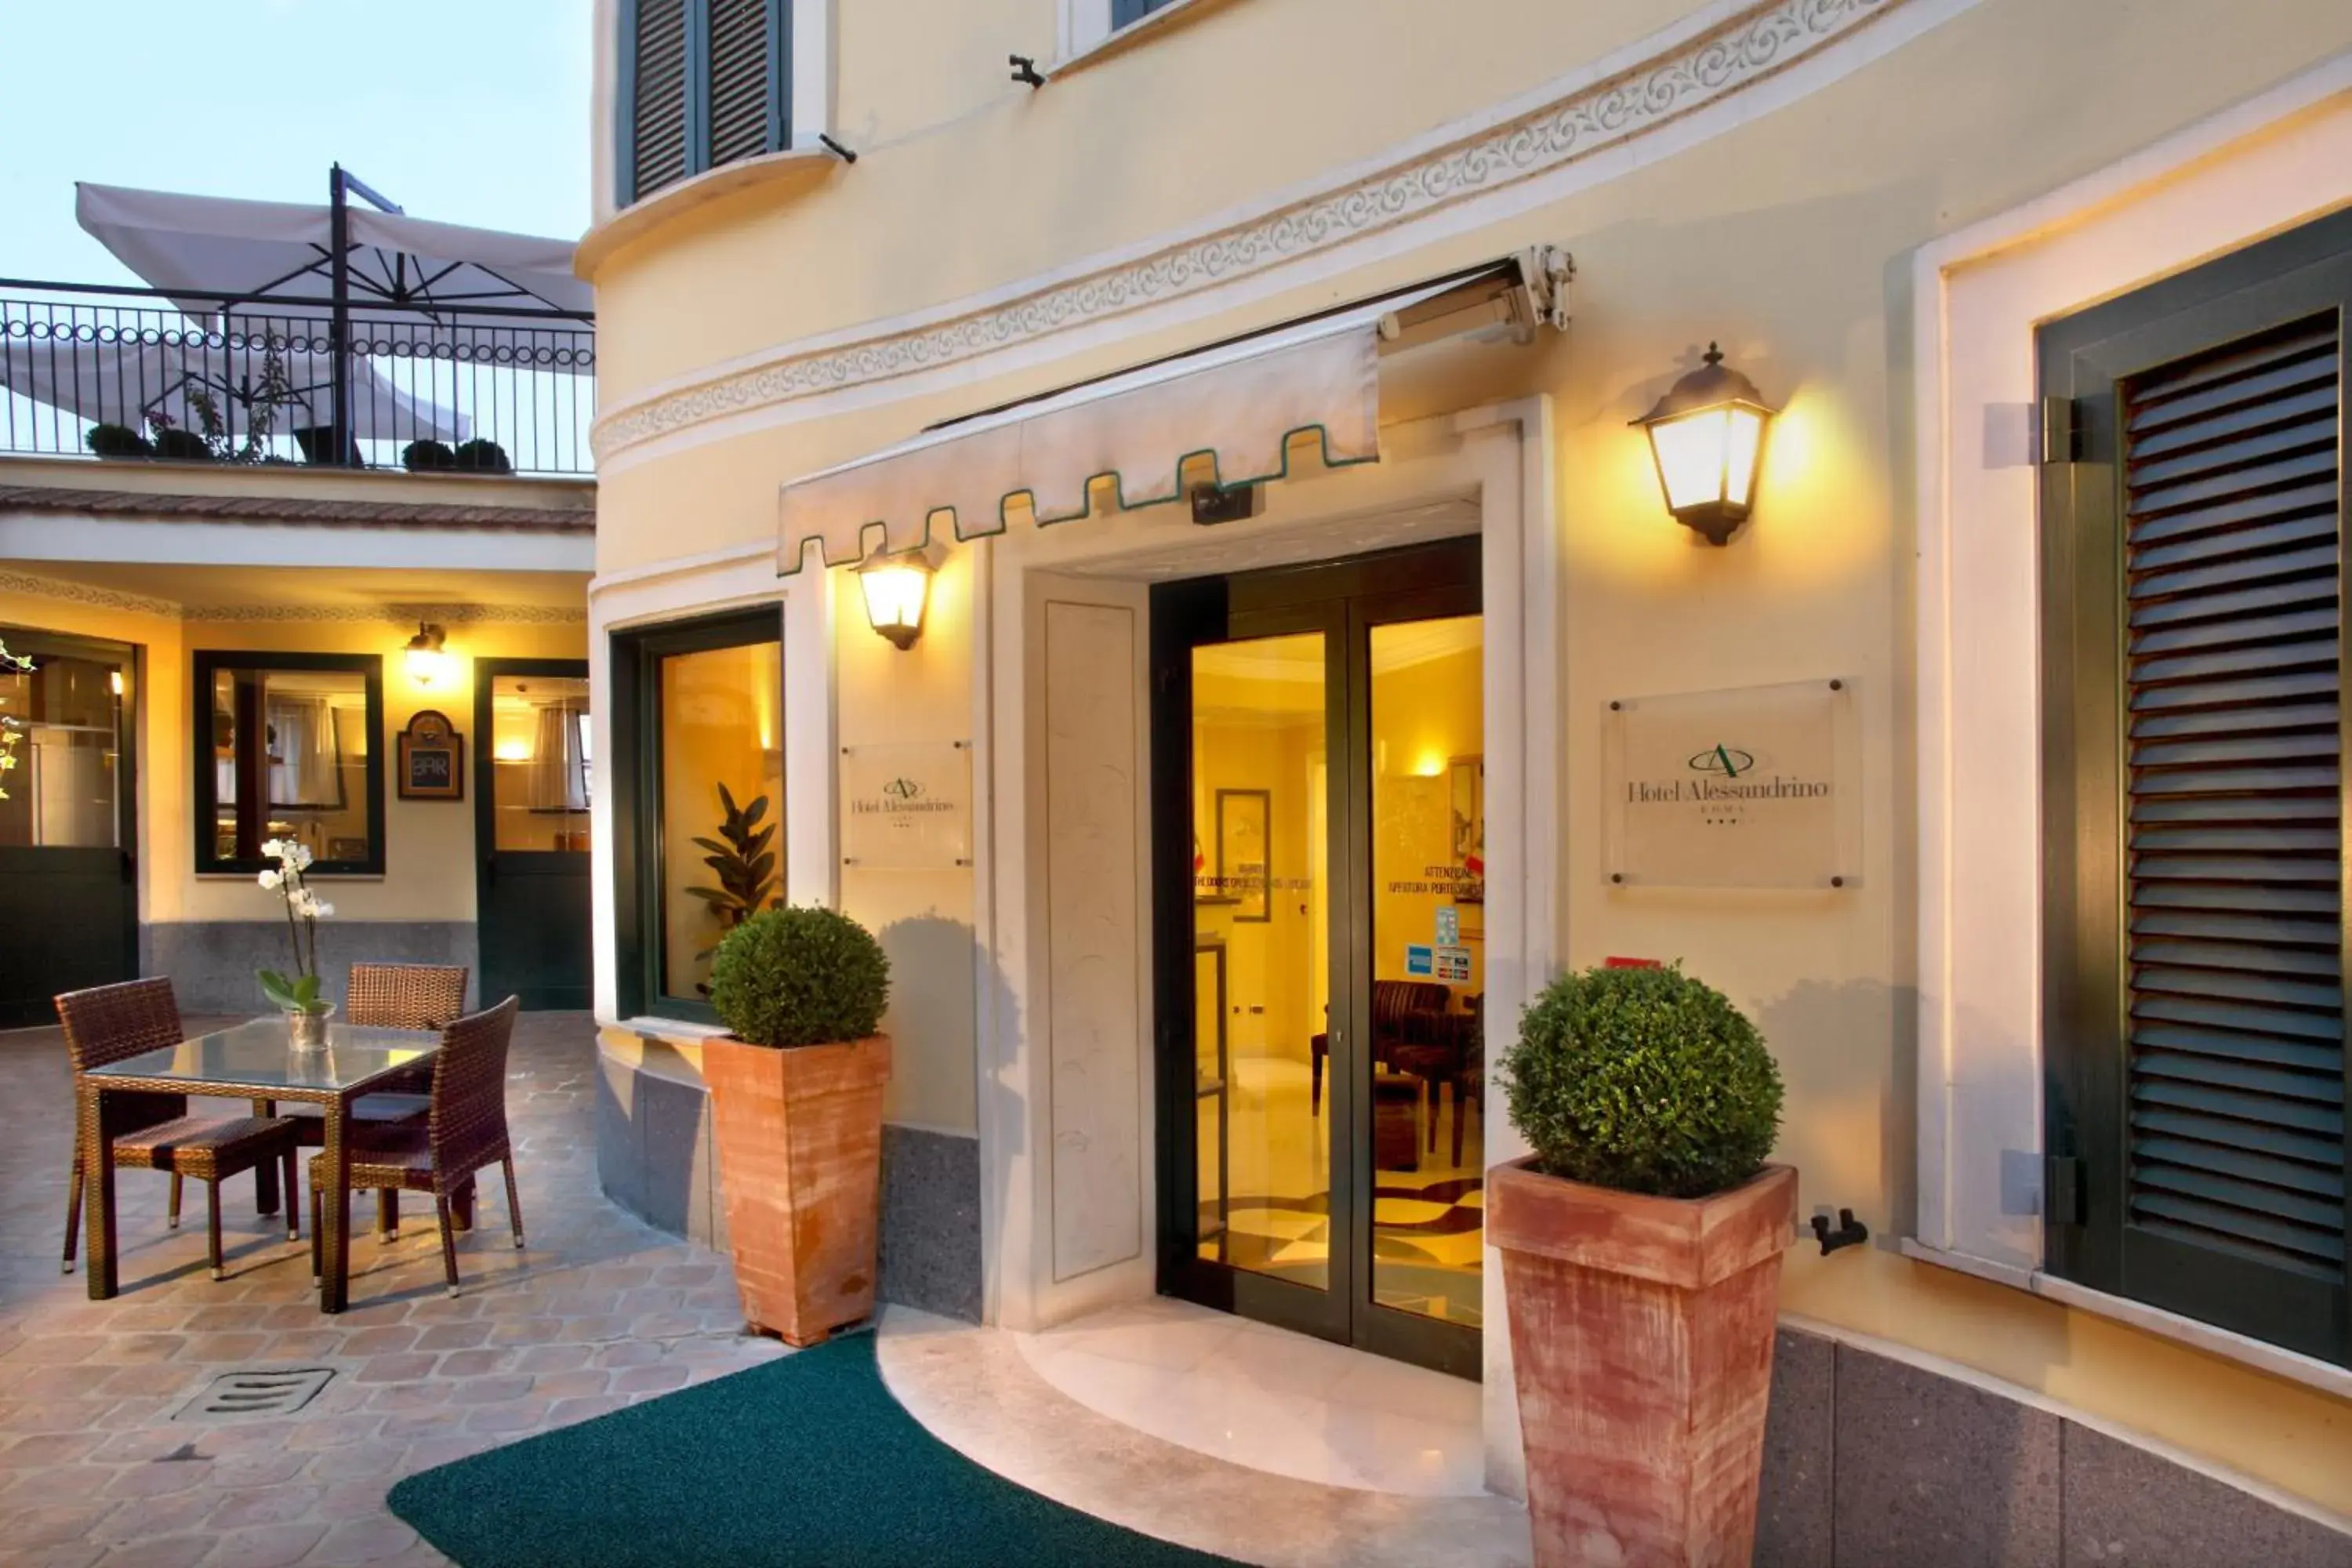 Facade/entrance in Hotel Alessandrino